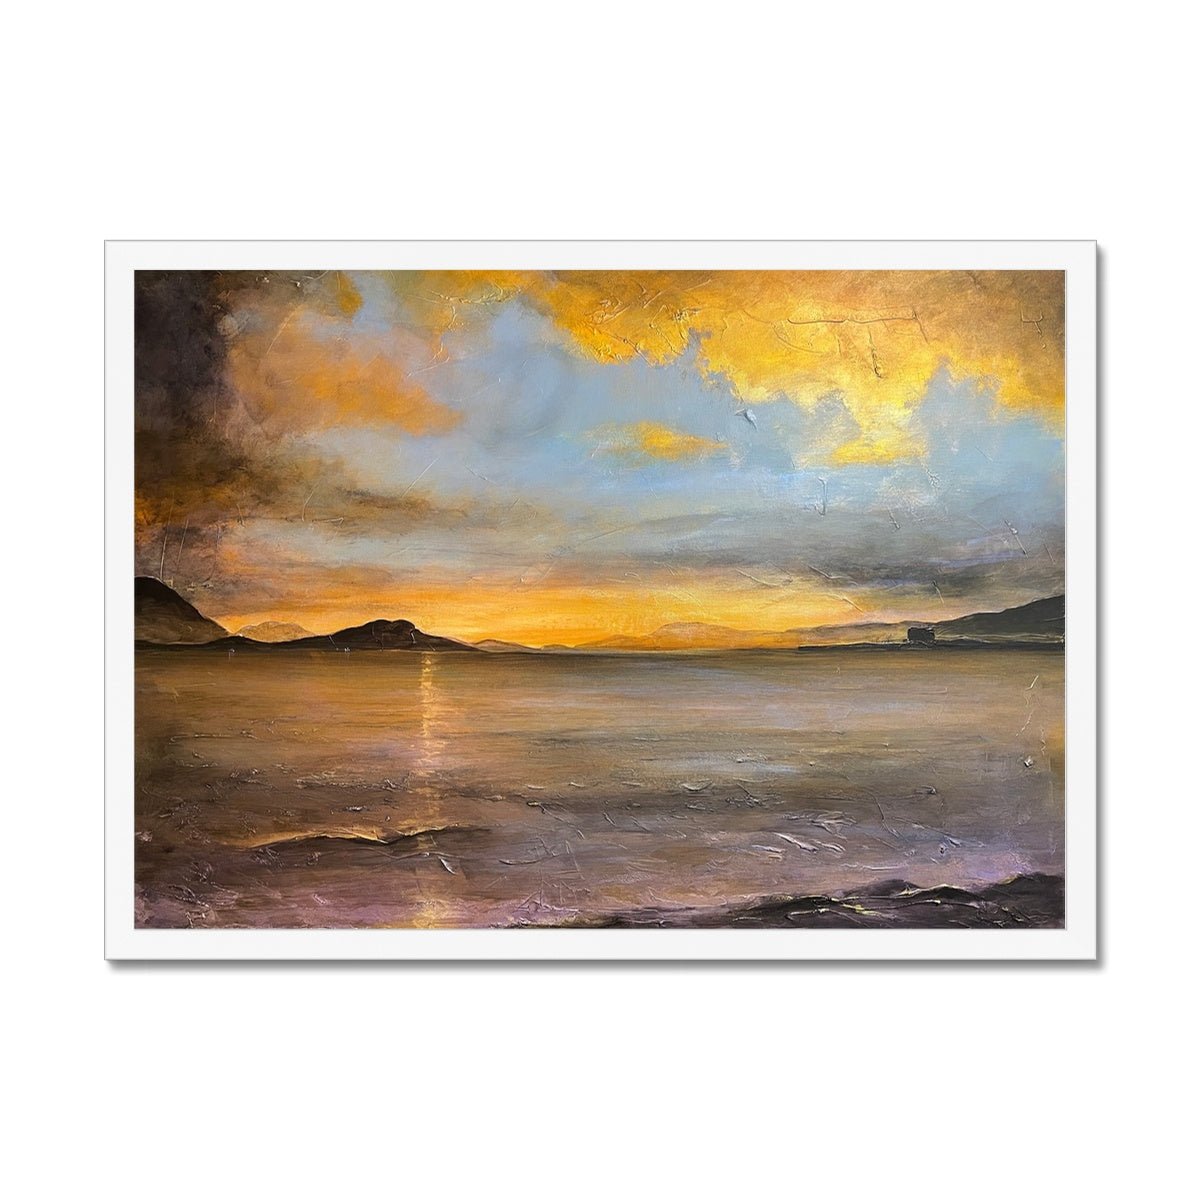 Loch Linnhe Sunset Painting | Framed Prints From Scotland-Framed Prints-Scottish Lochs & Mountains Art Gallery-A2 Landscape-White Frame-Paintings, Prints, Homeware, Art Gifts From Scotland By Scottish Artist Kevin Hunter